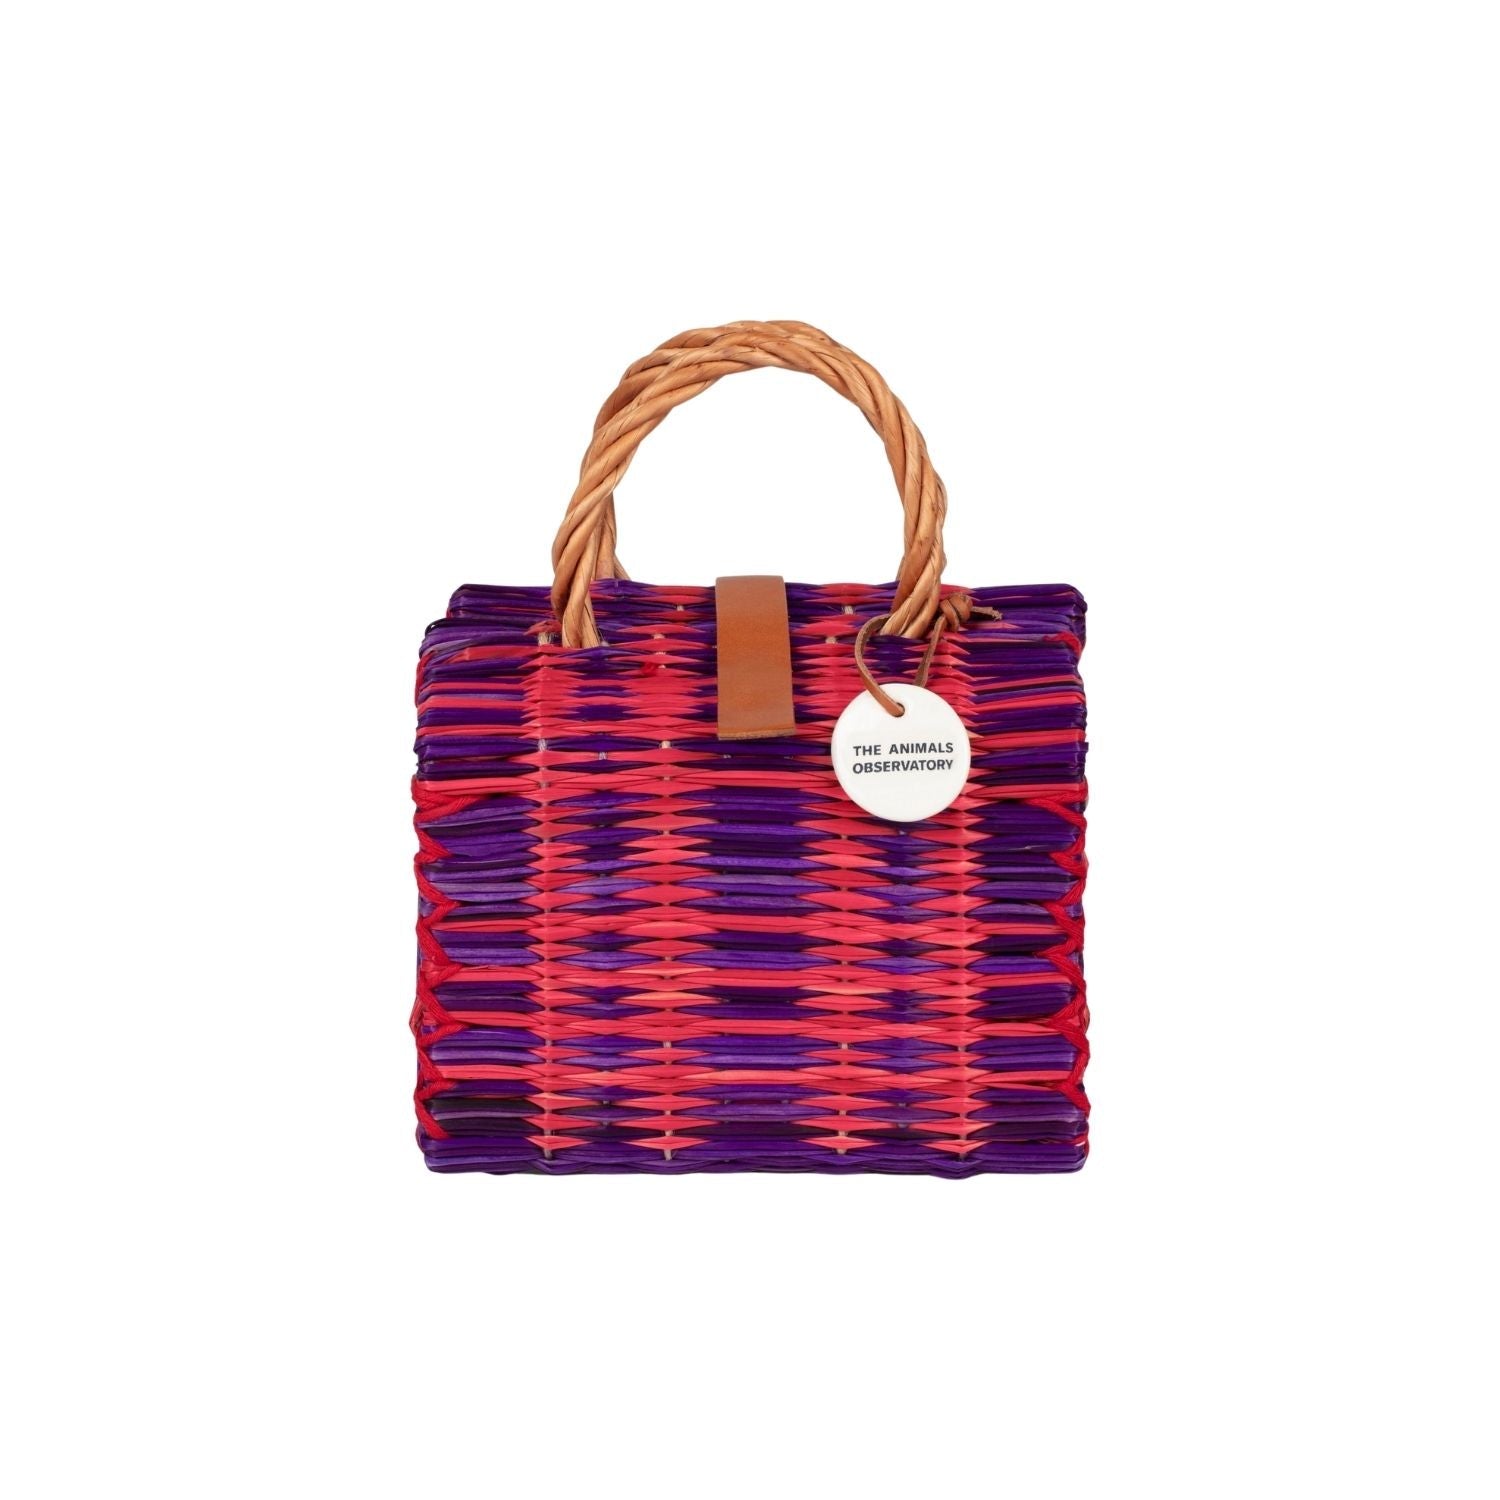 Mini Basket bag onesize bag purple Accessories The Animals Observatory 